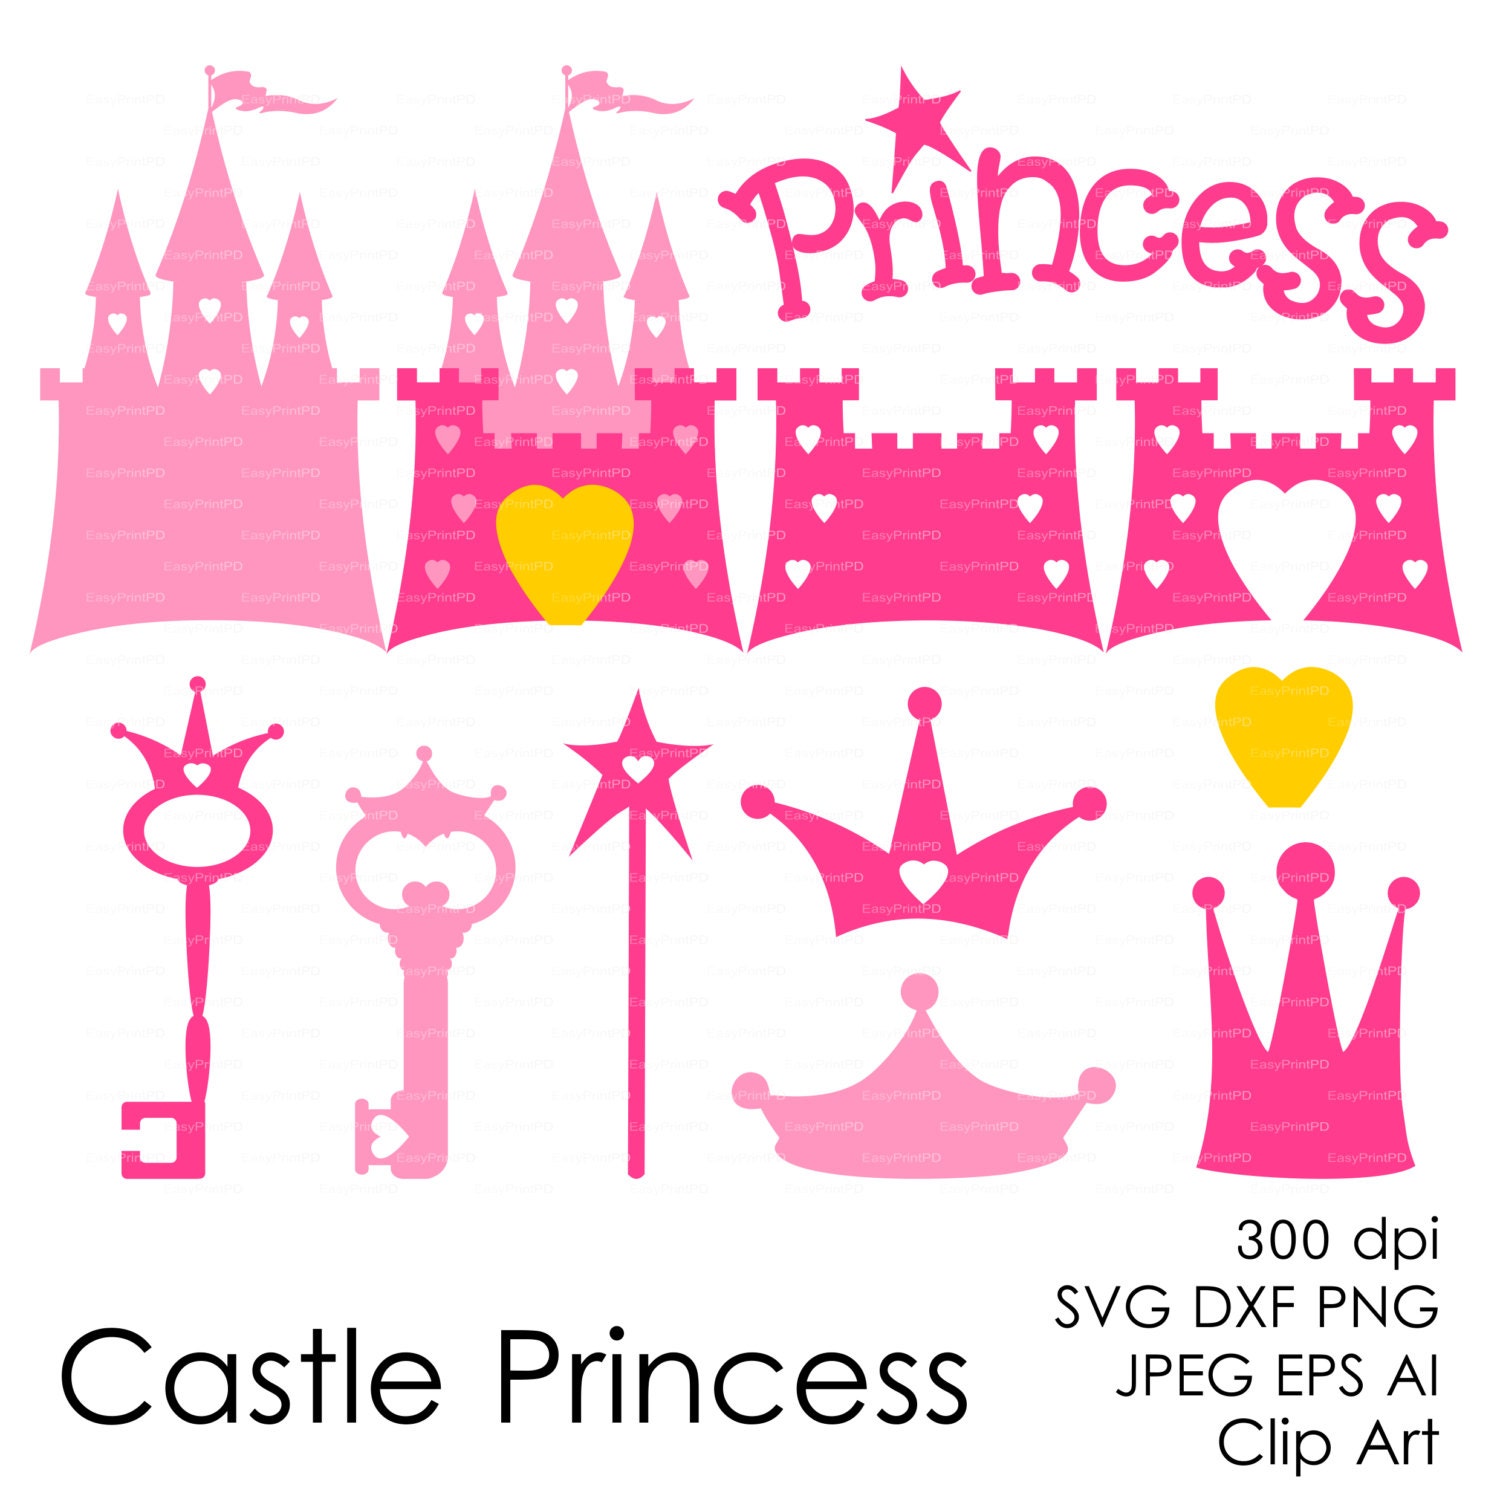 Download Royal Castle Princess Cinderella 300 dpi svg dxf ai eps